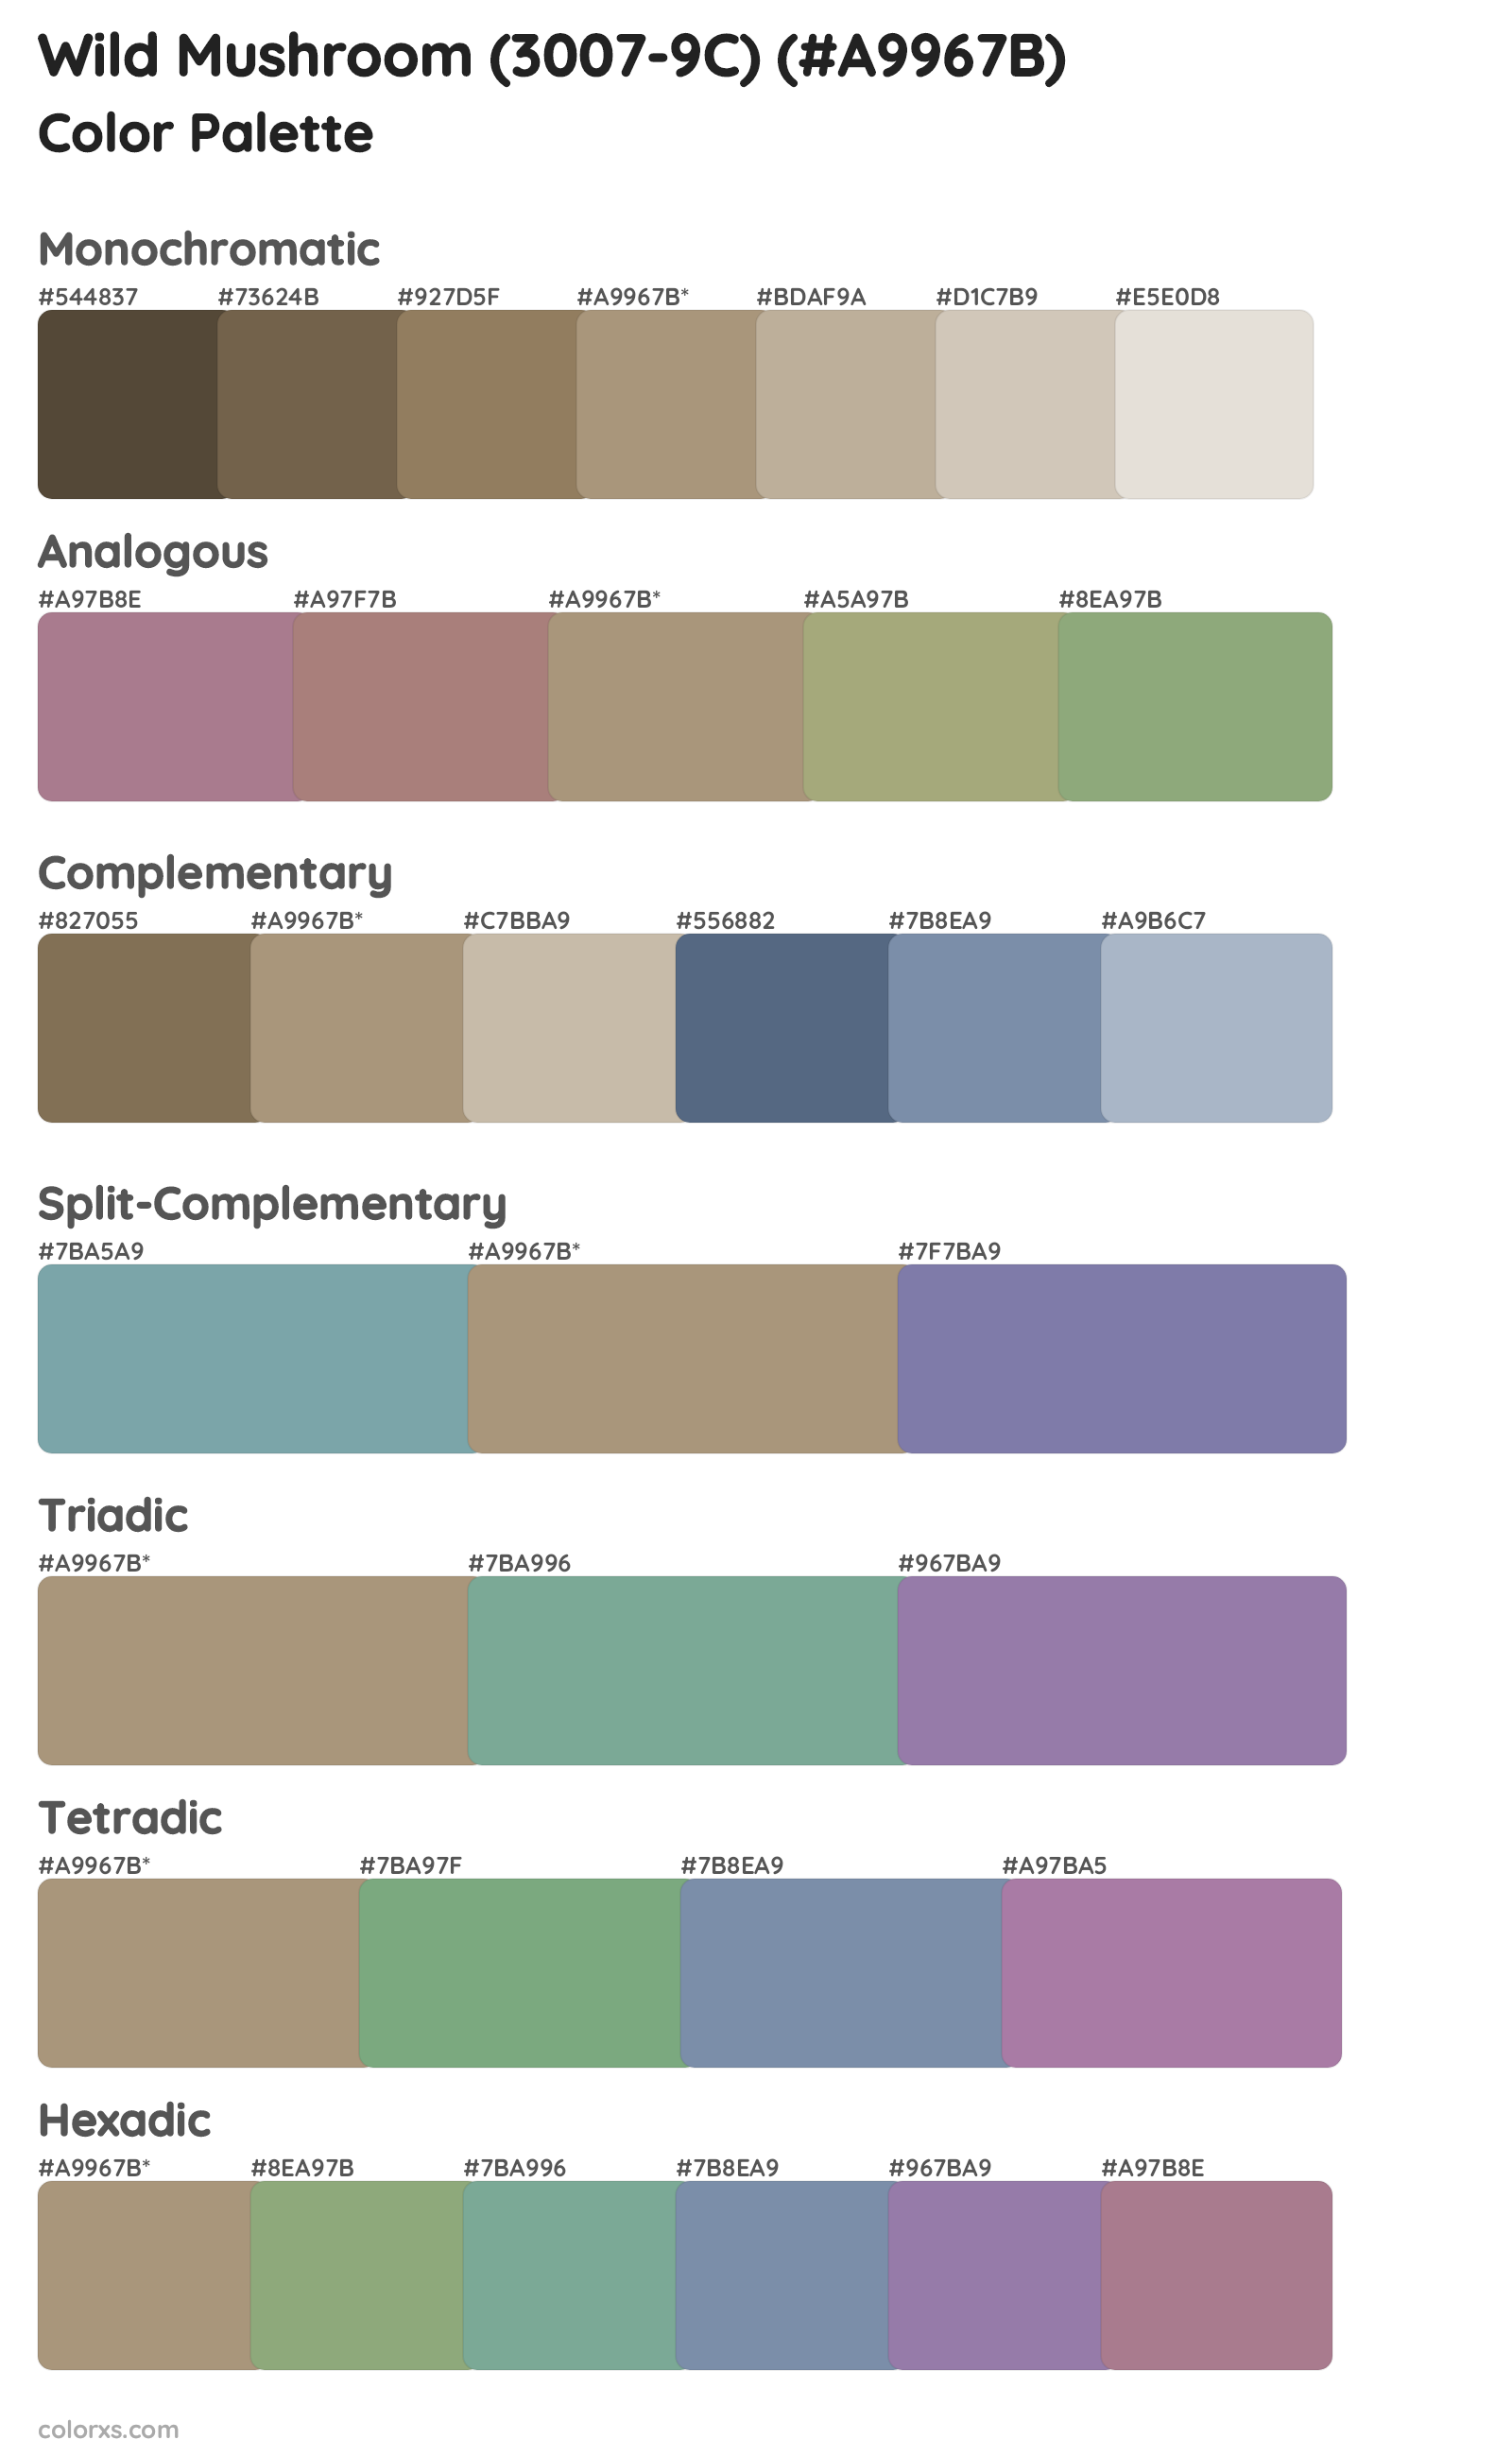 Wild Mushroom (3007-9C) Color Scheme Palettes